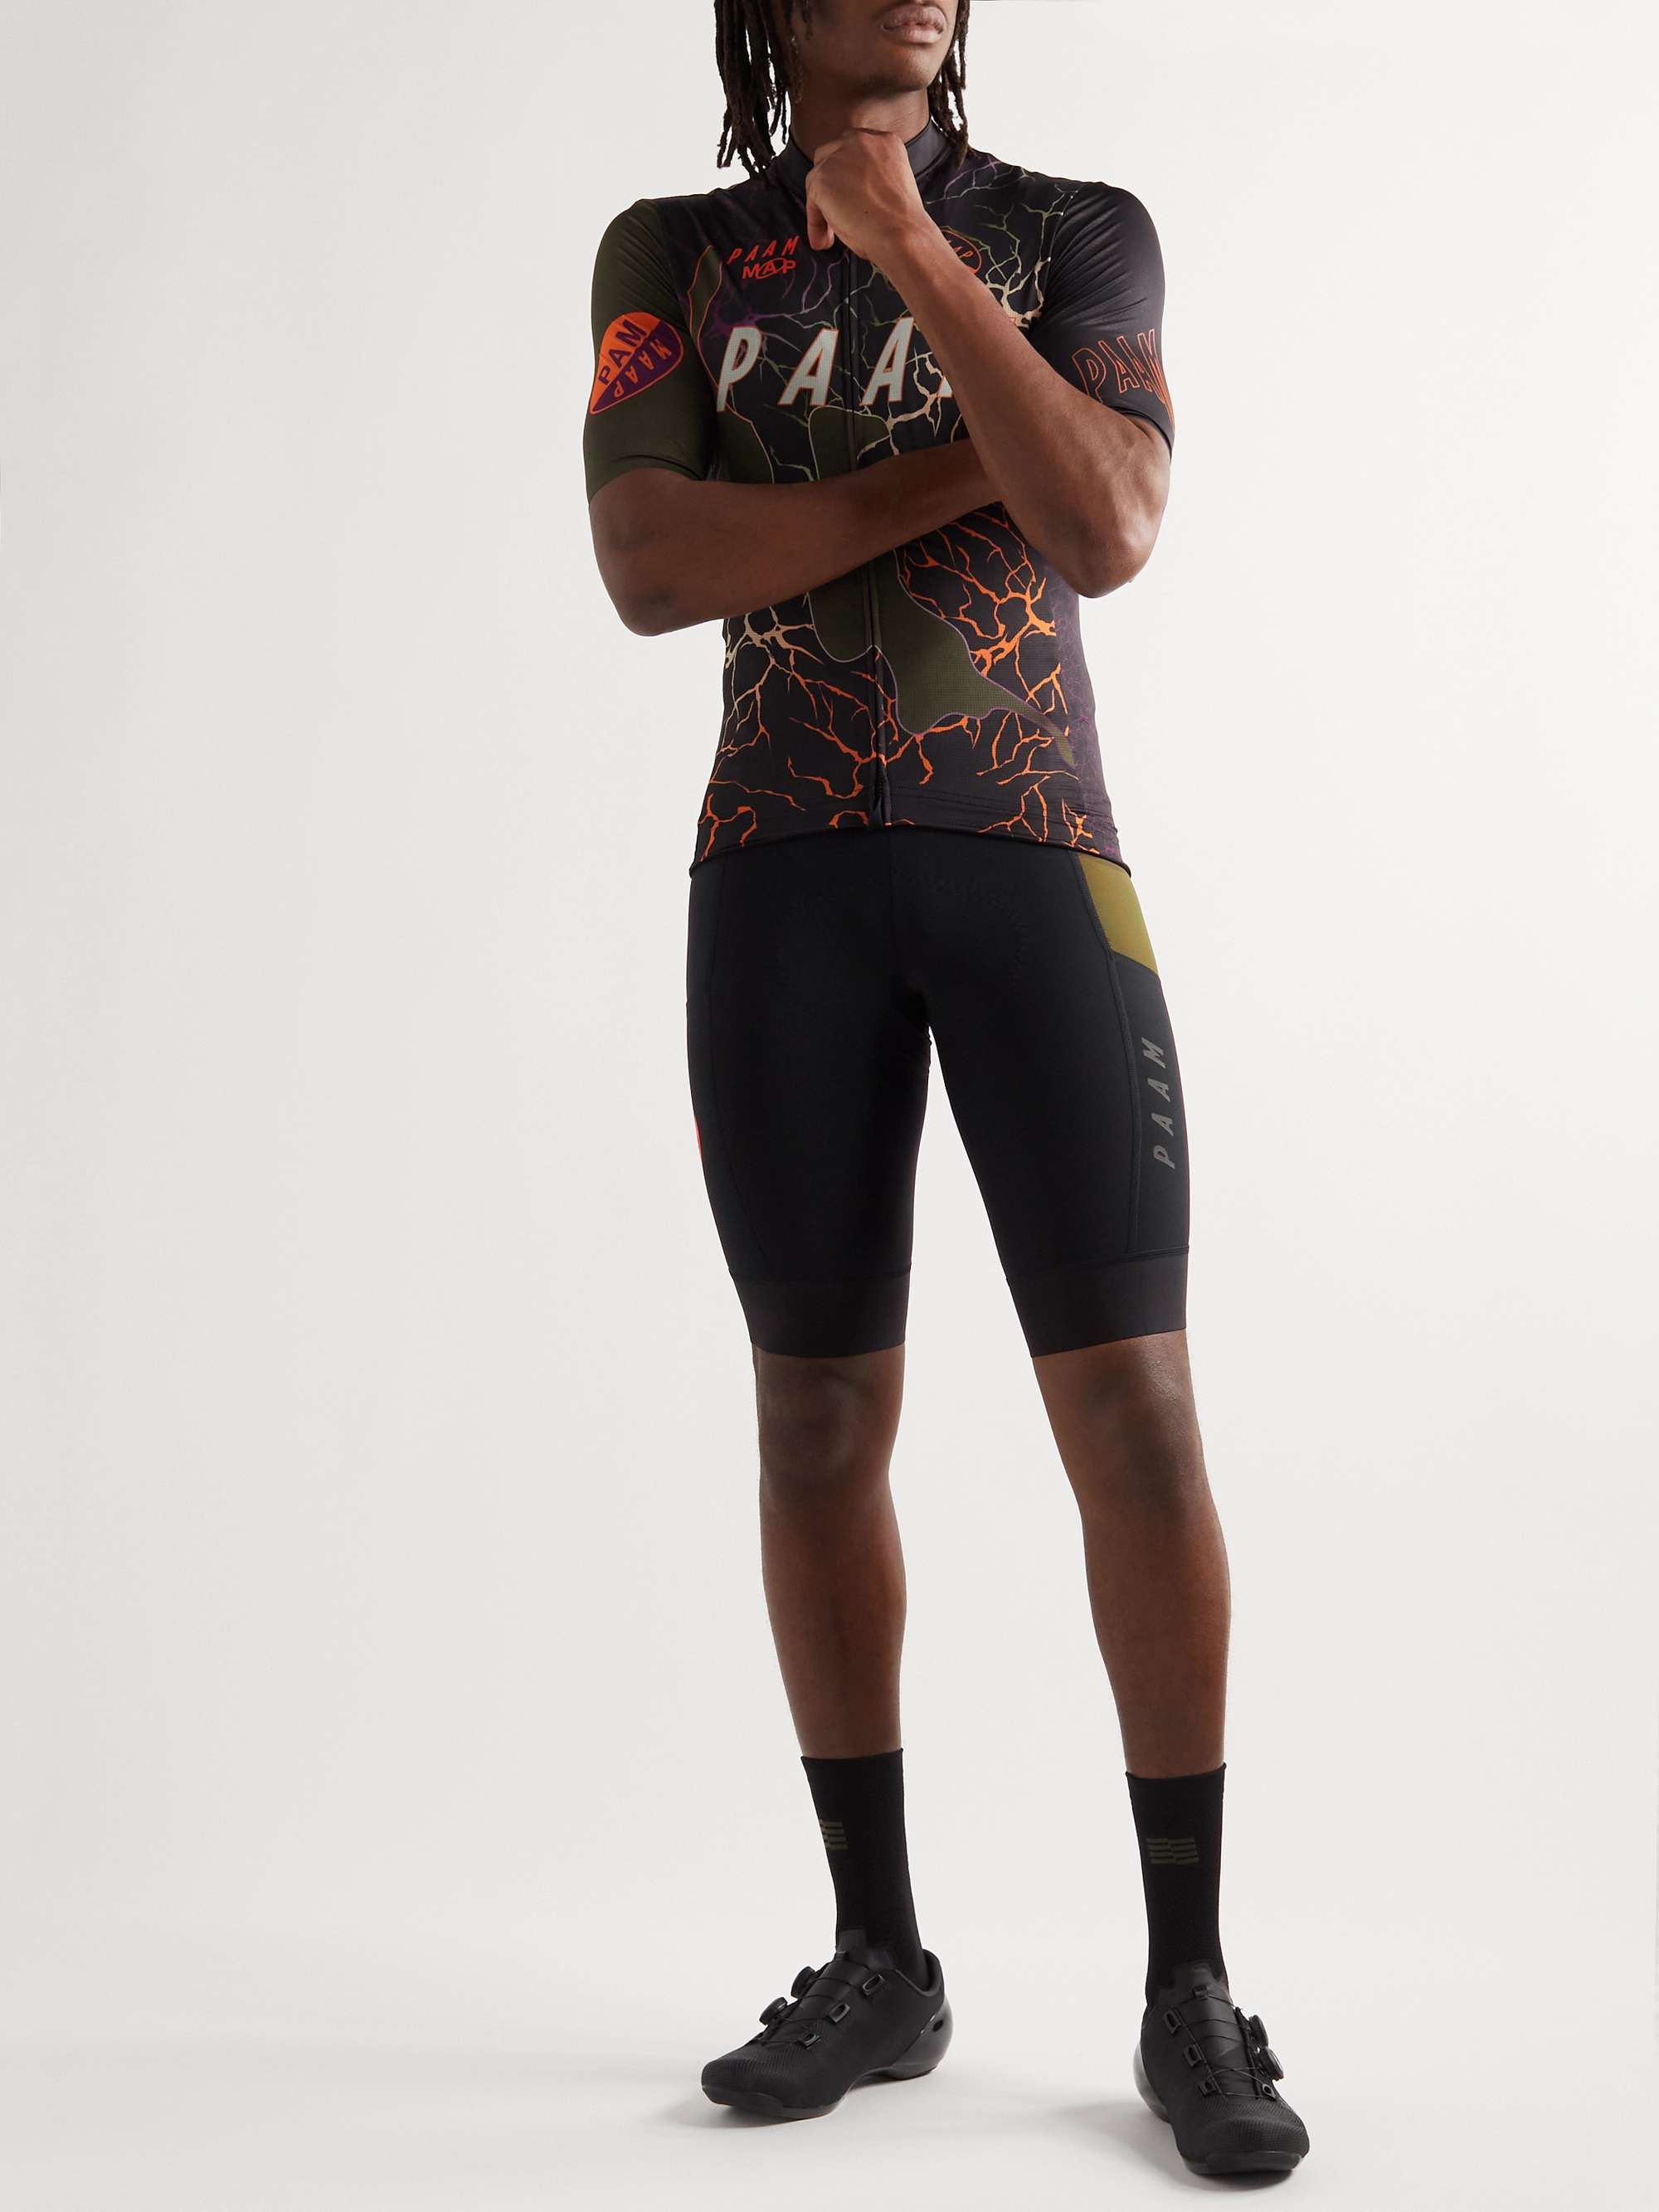 MAAP + P.A.M. Cargo Stretch Cycling Bib Shorts